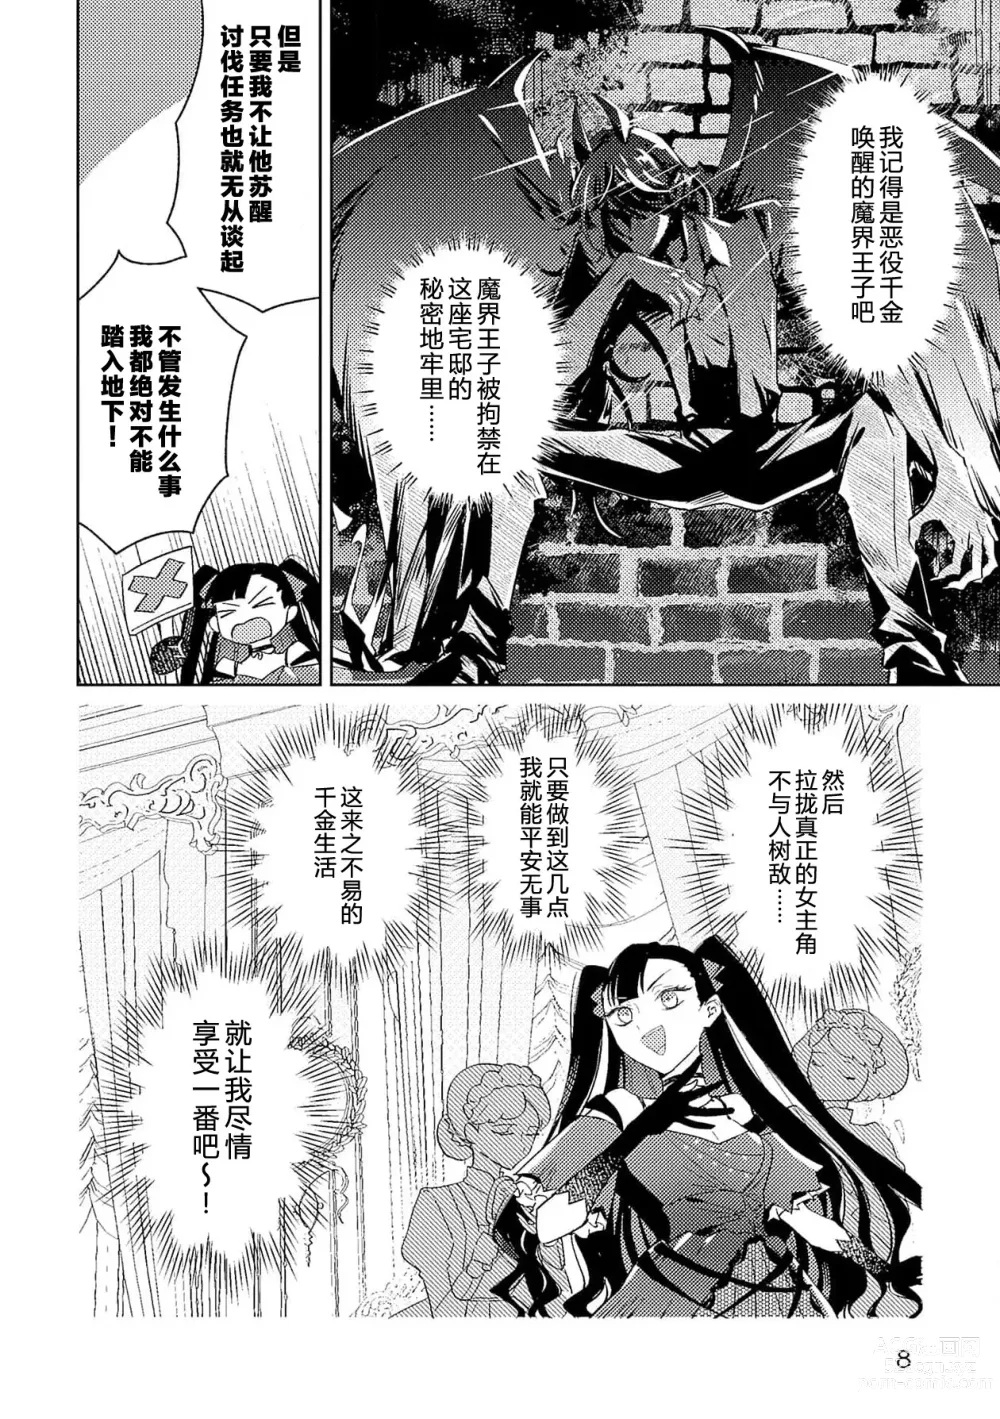 Page 8 of manga 身为恶役千金，堕落于魔界王子身下这条路线真的可以有？ 1-7